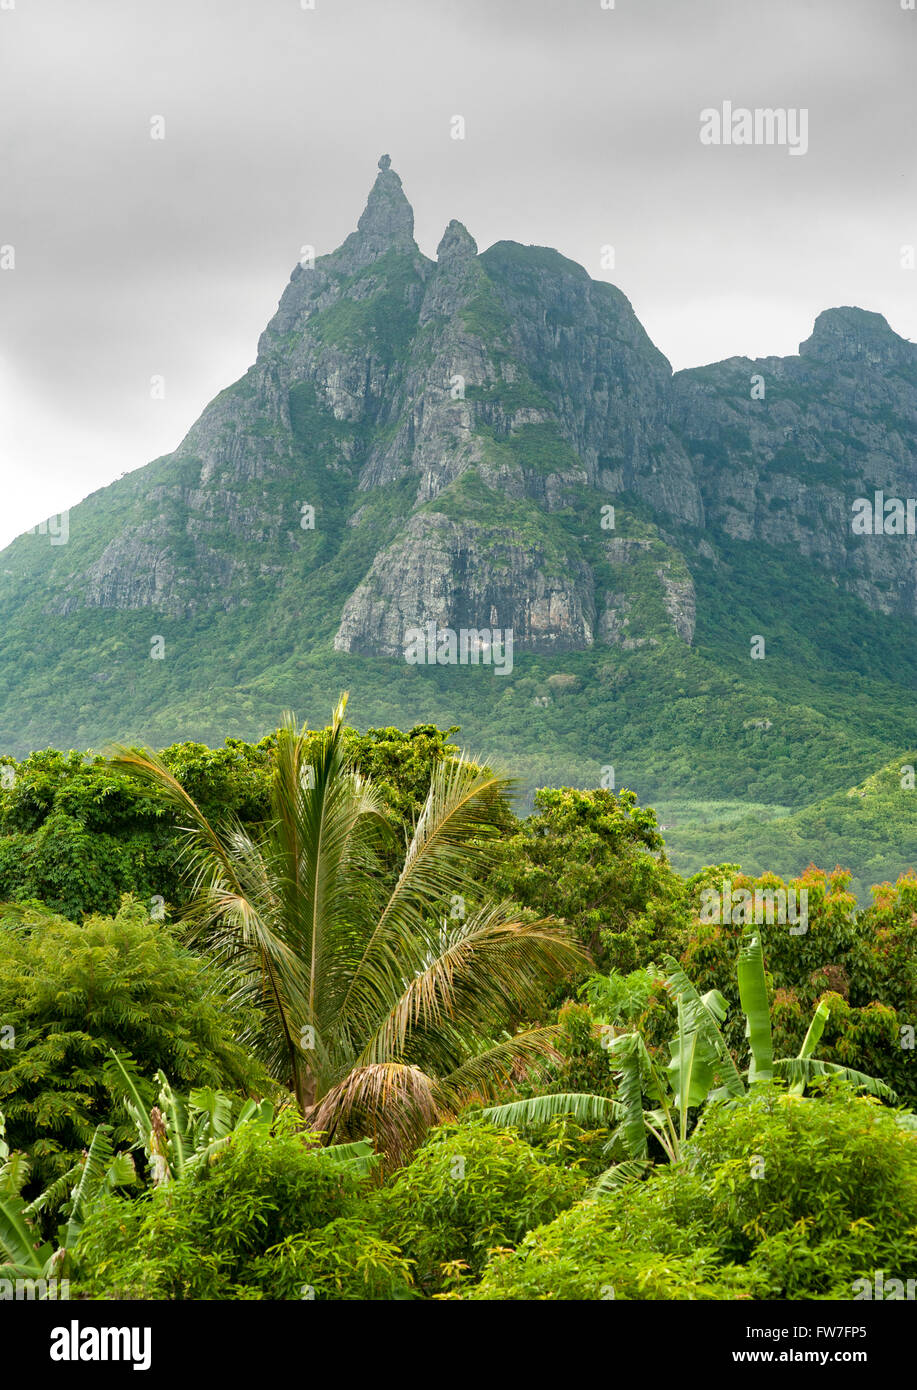 Le Pouce (die Daumen) Berggipfel und umgebenden Vegetation in Mauritius. Stockfoto